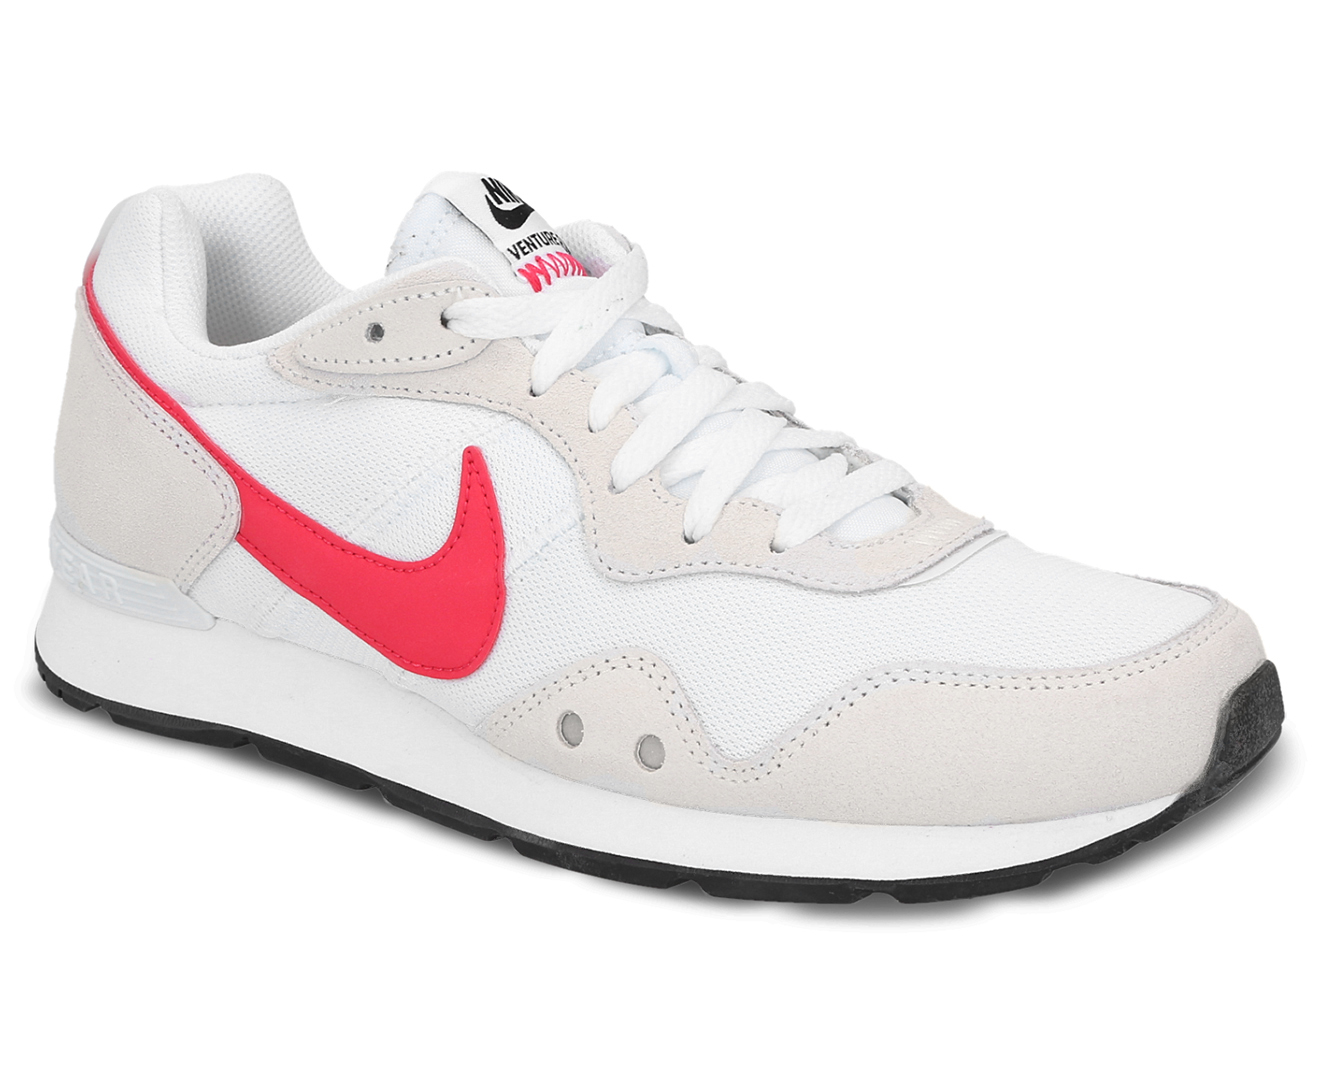 Nike Women's Venture Runner Shoe- White/Black/Siren Red | Catch.co.nz